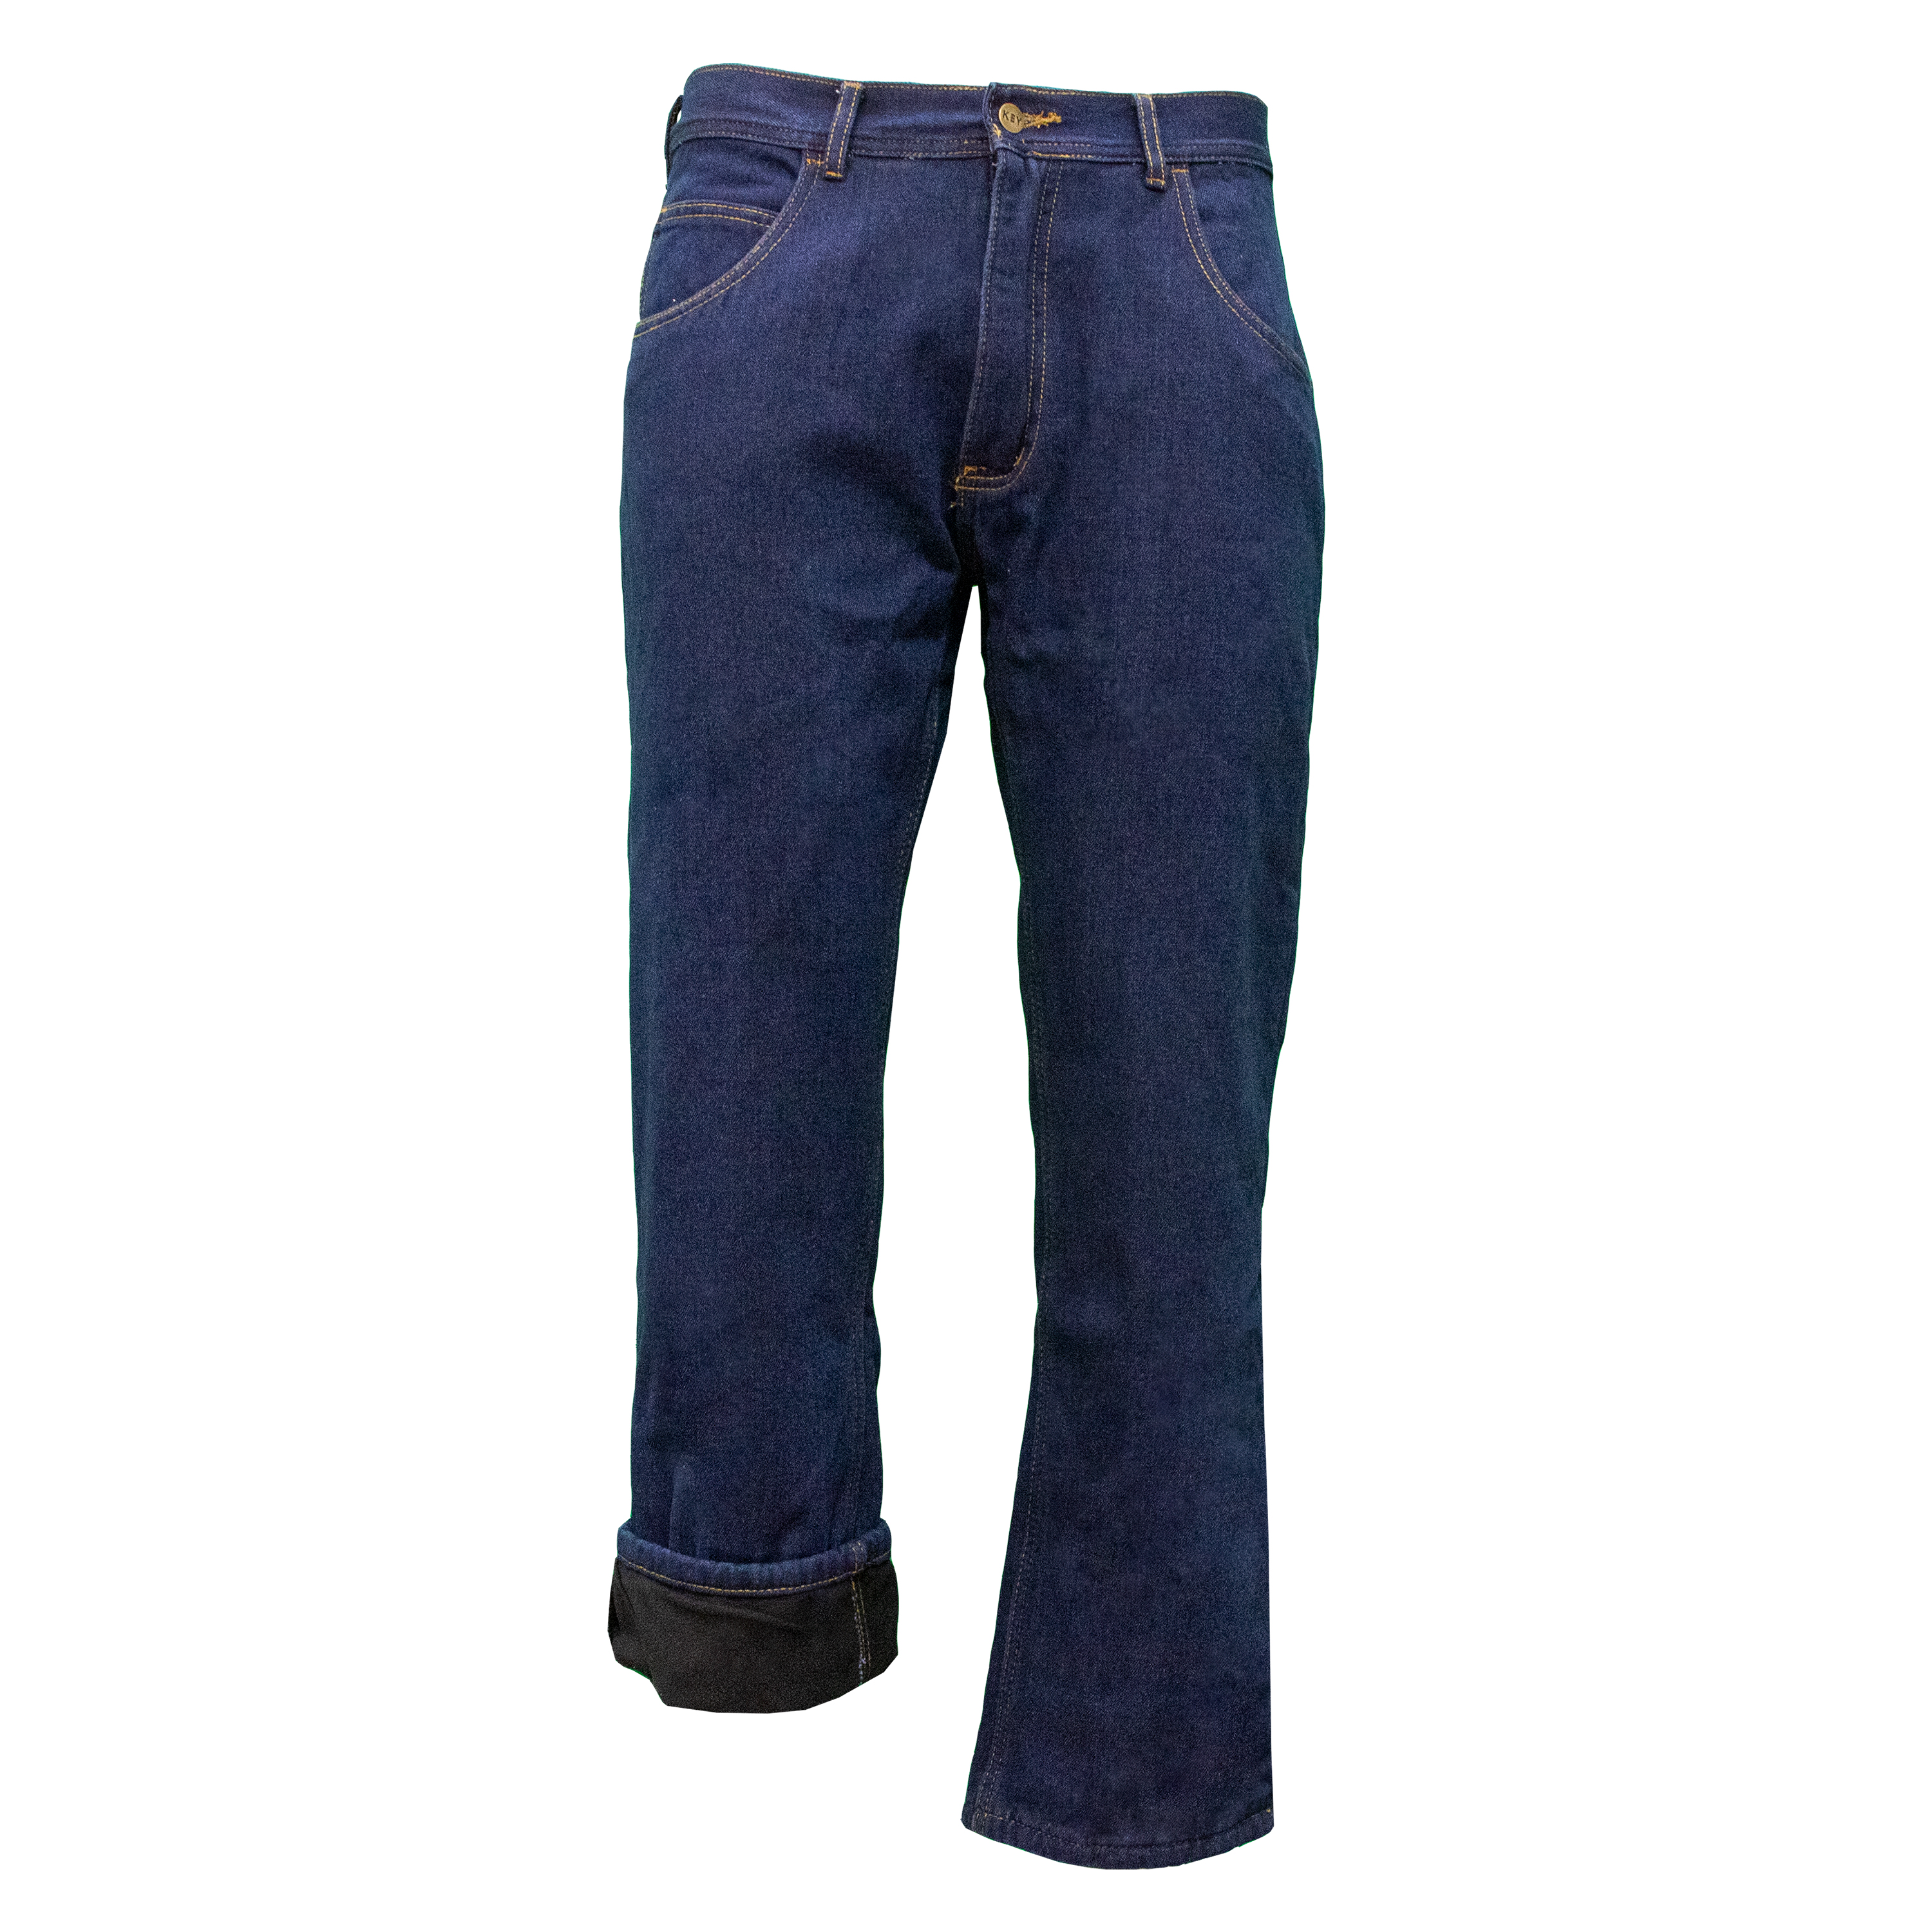 Fleece Lined Jeans - Custom Corporate Apparel Key For Business